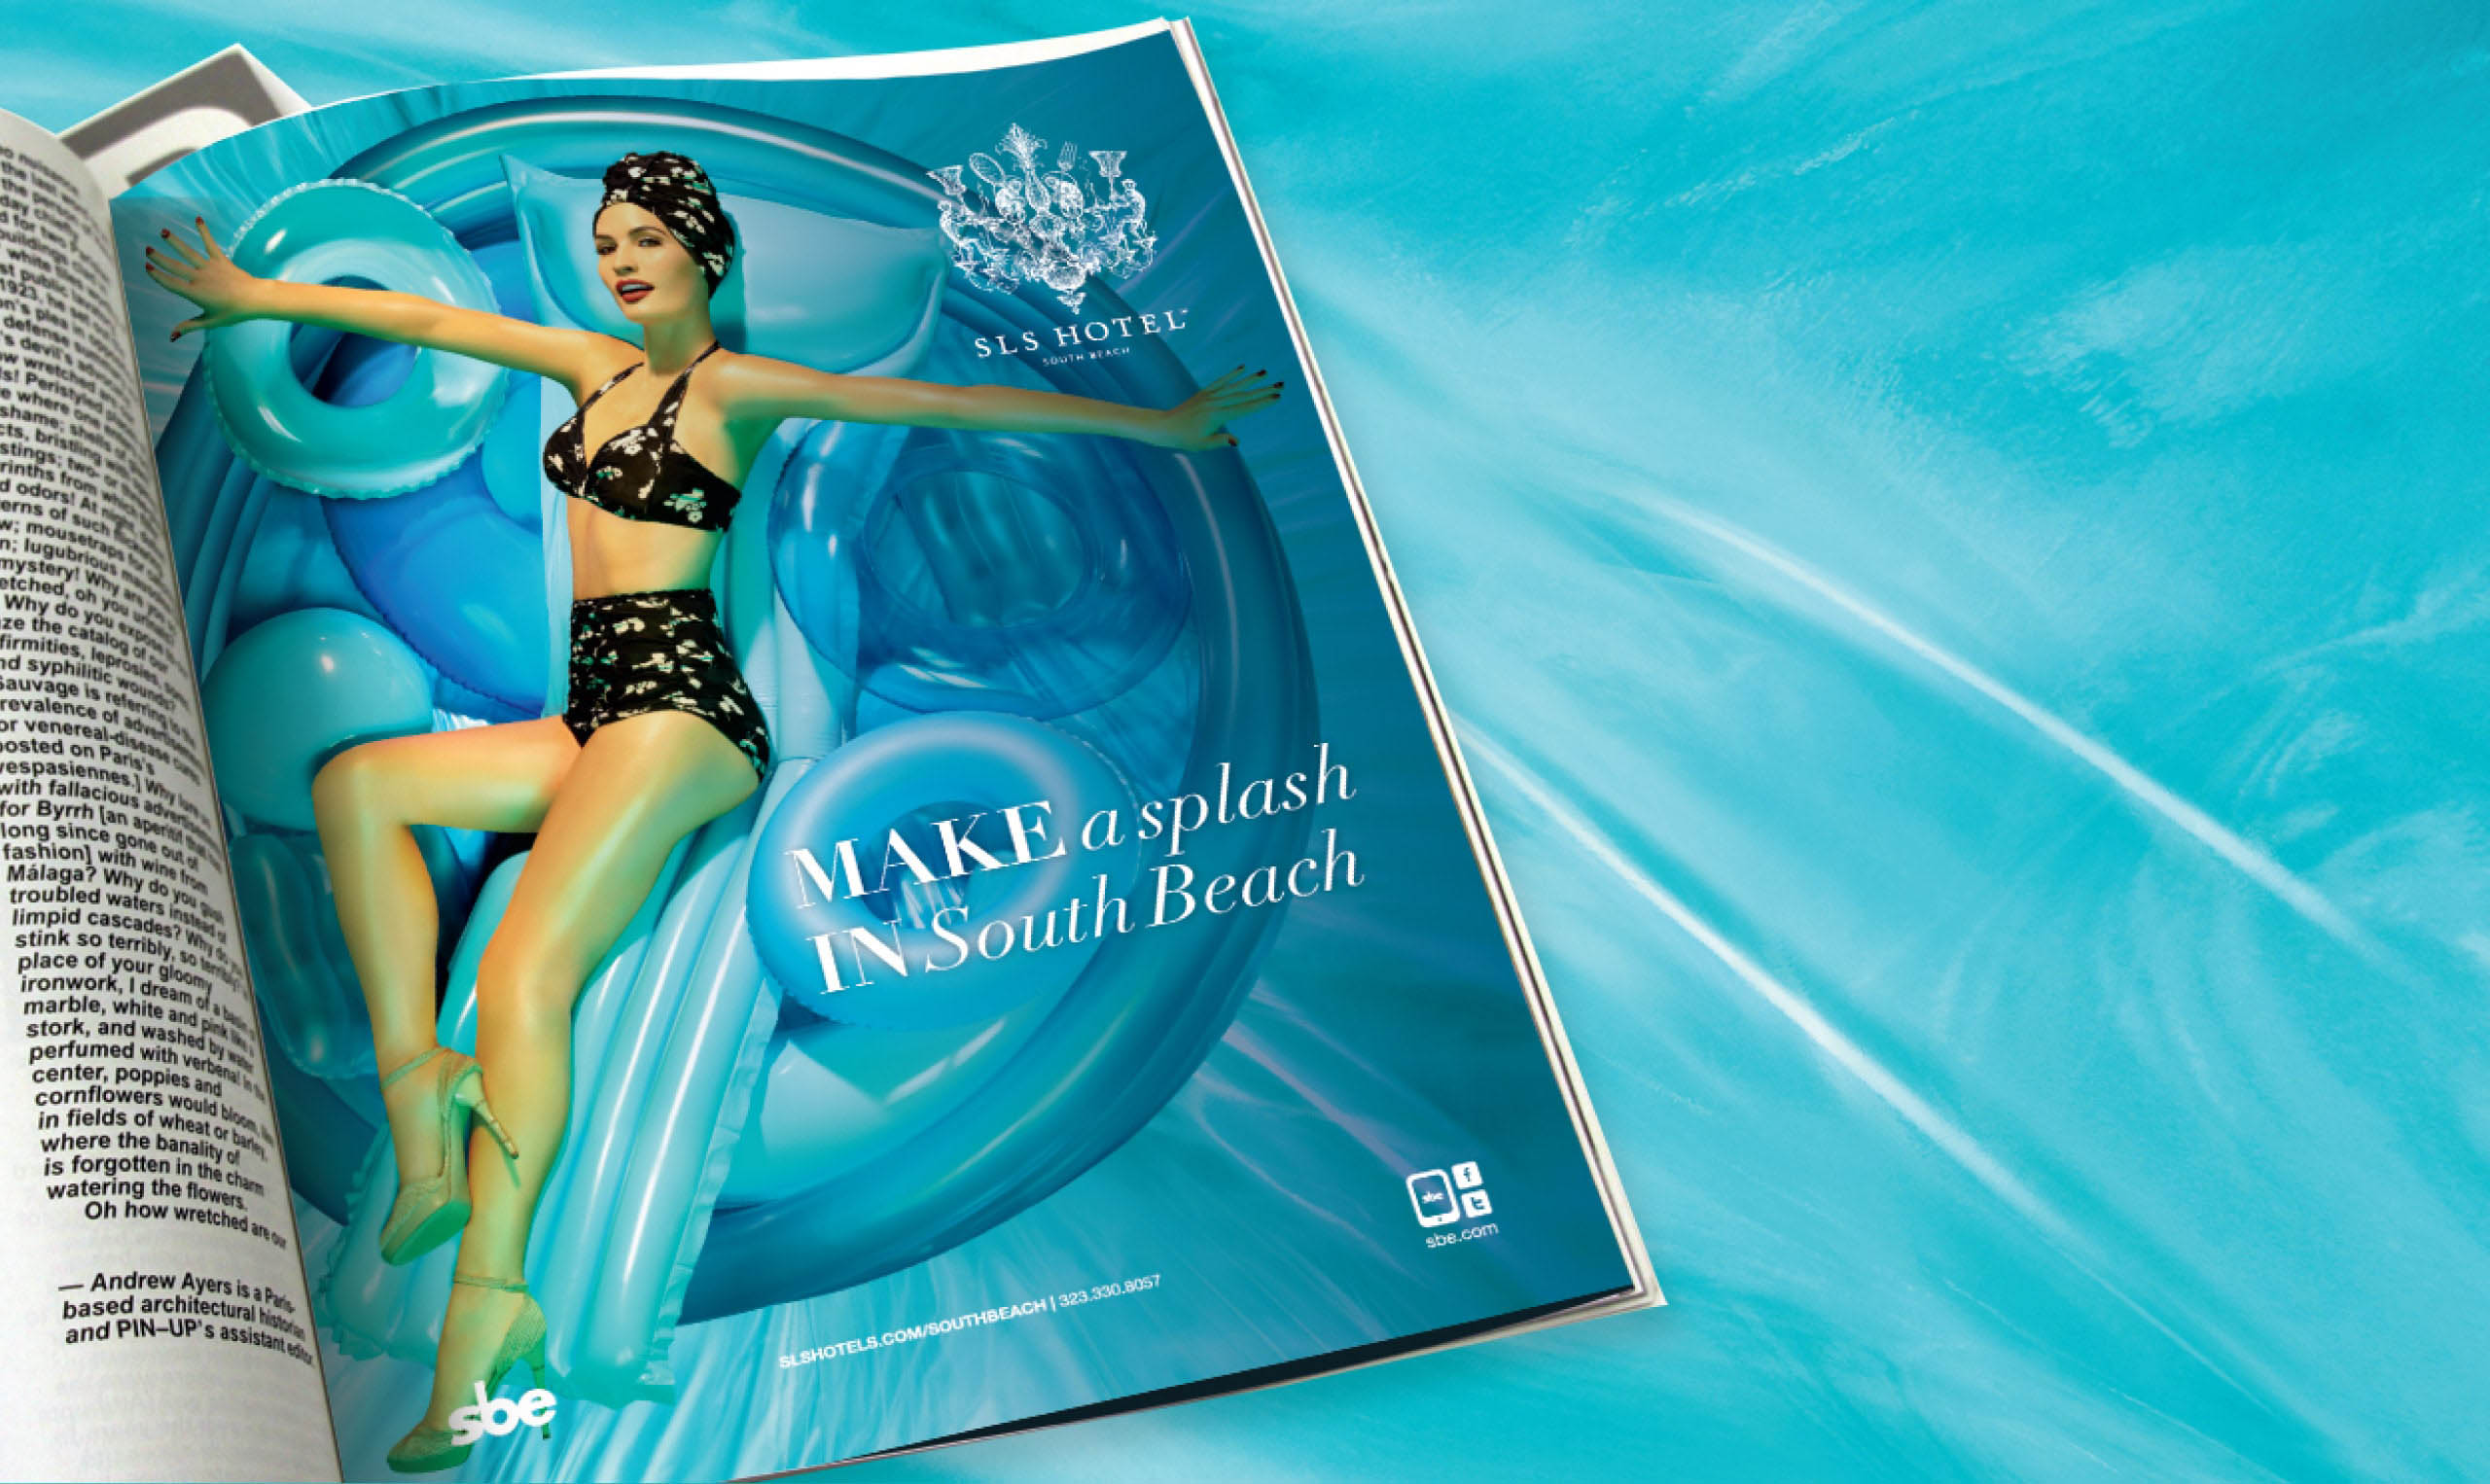 An open book showcasing brand development with an image of a woman in a bikini.